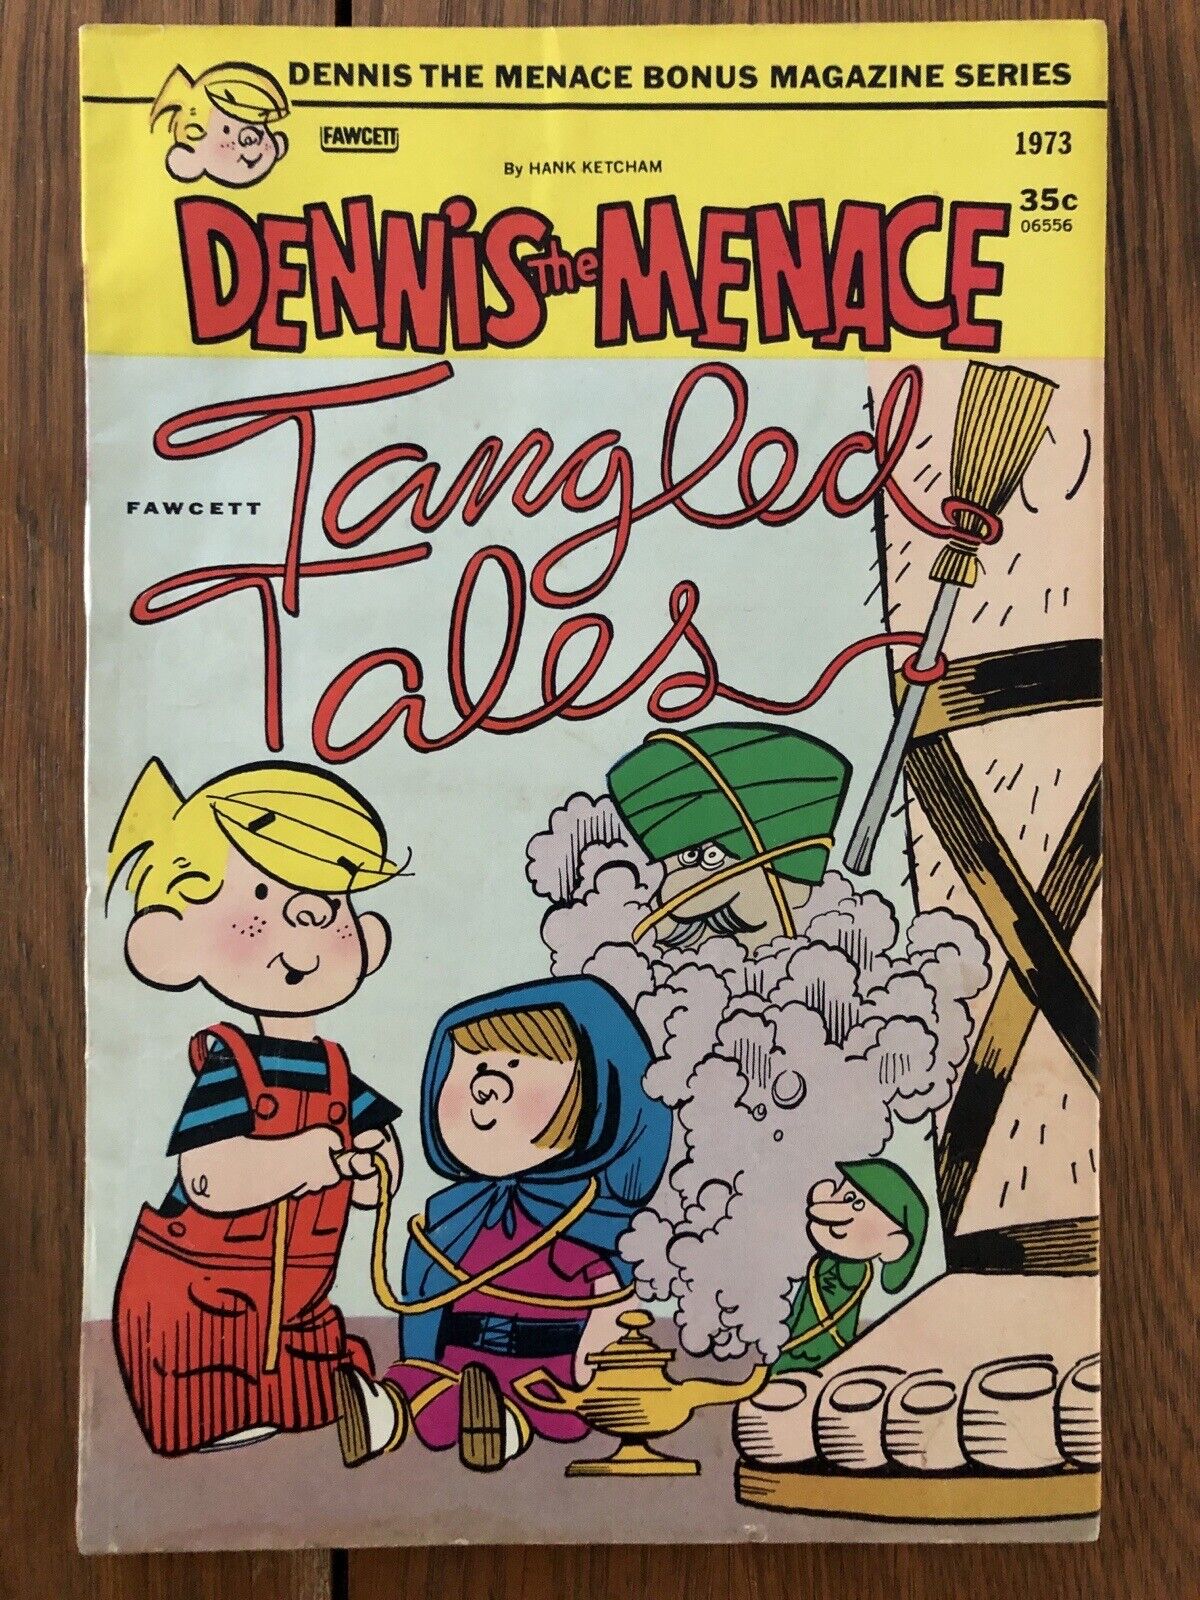 DENNIS THE MENACE BONUS MAGAZINE SERIES #113 (Feb 1973, Fawcett) "Tangled Tales"